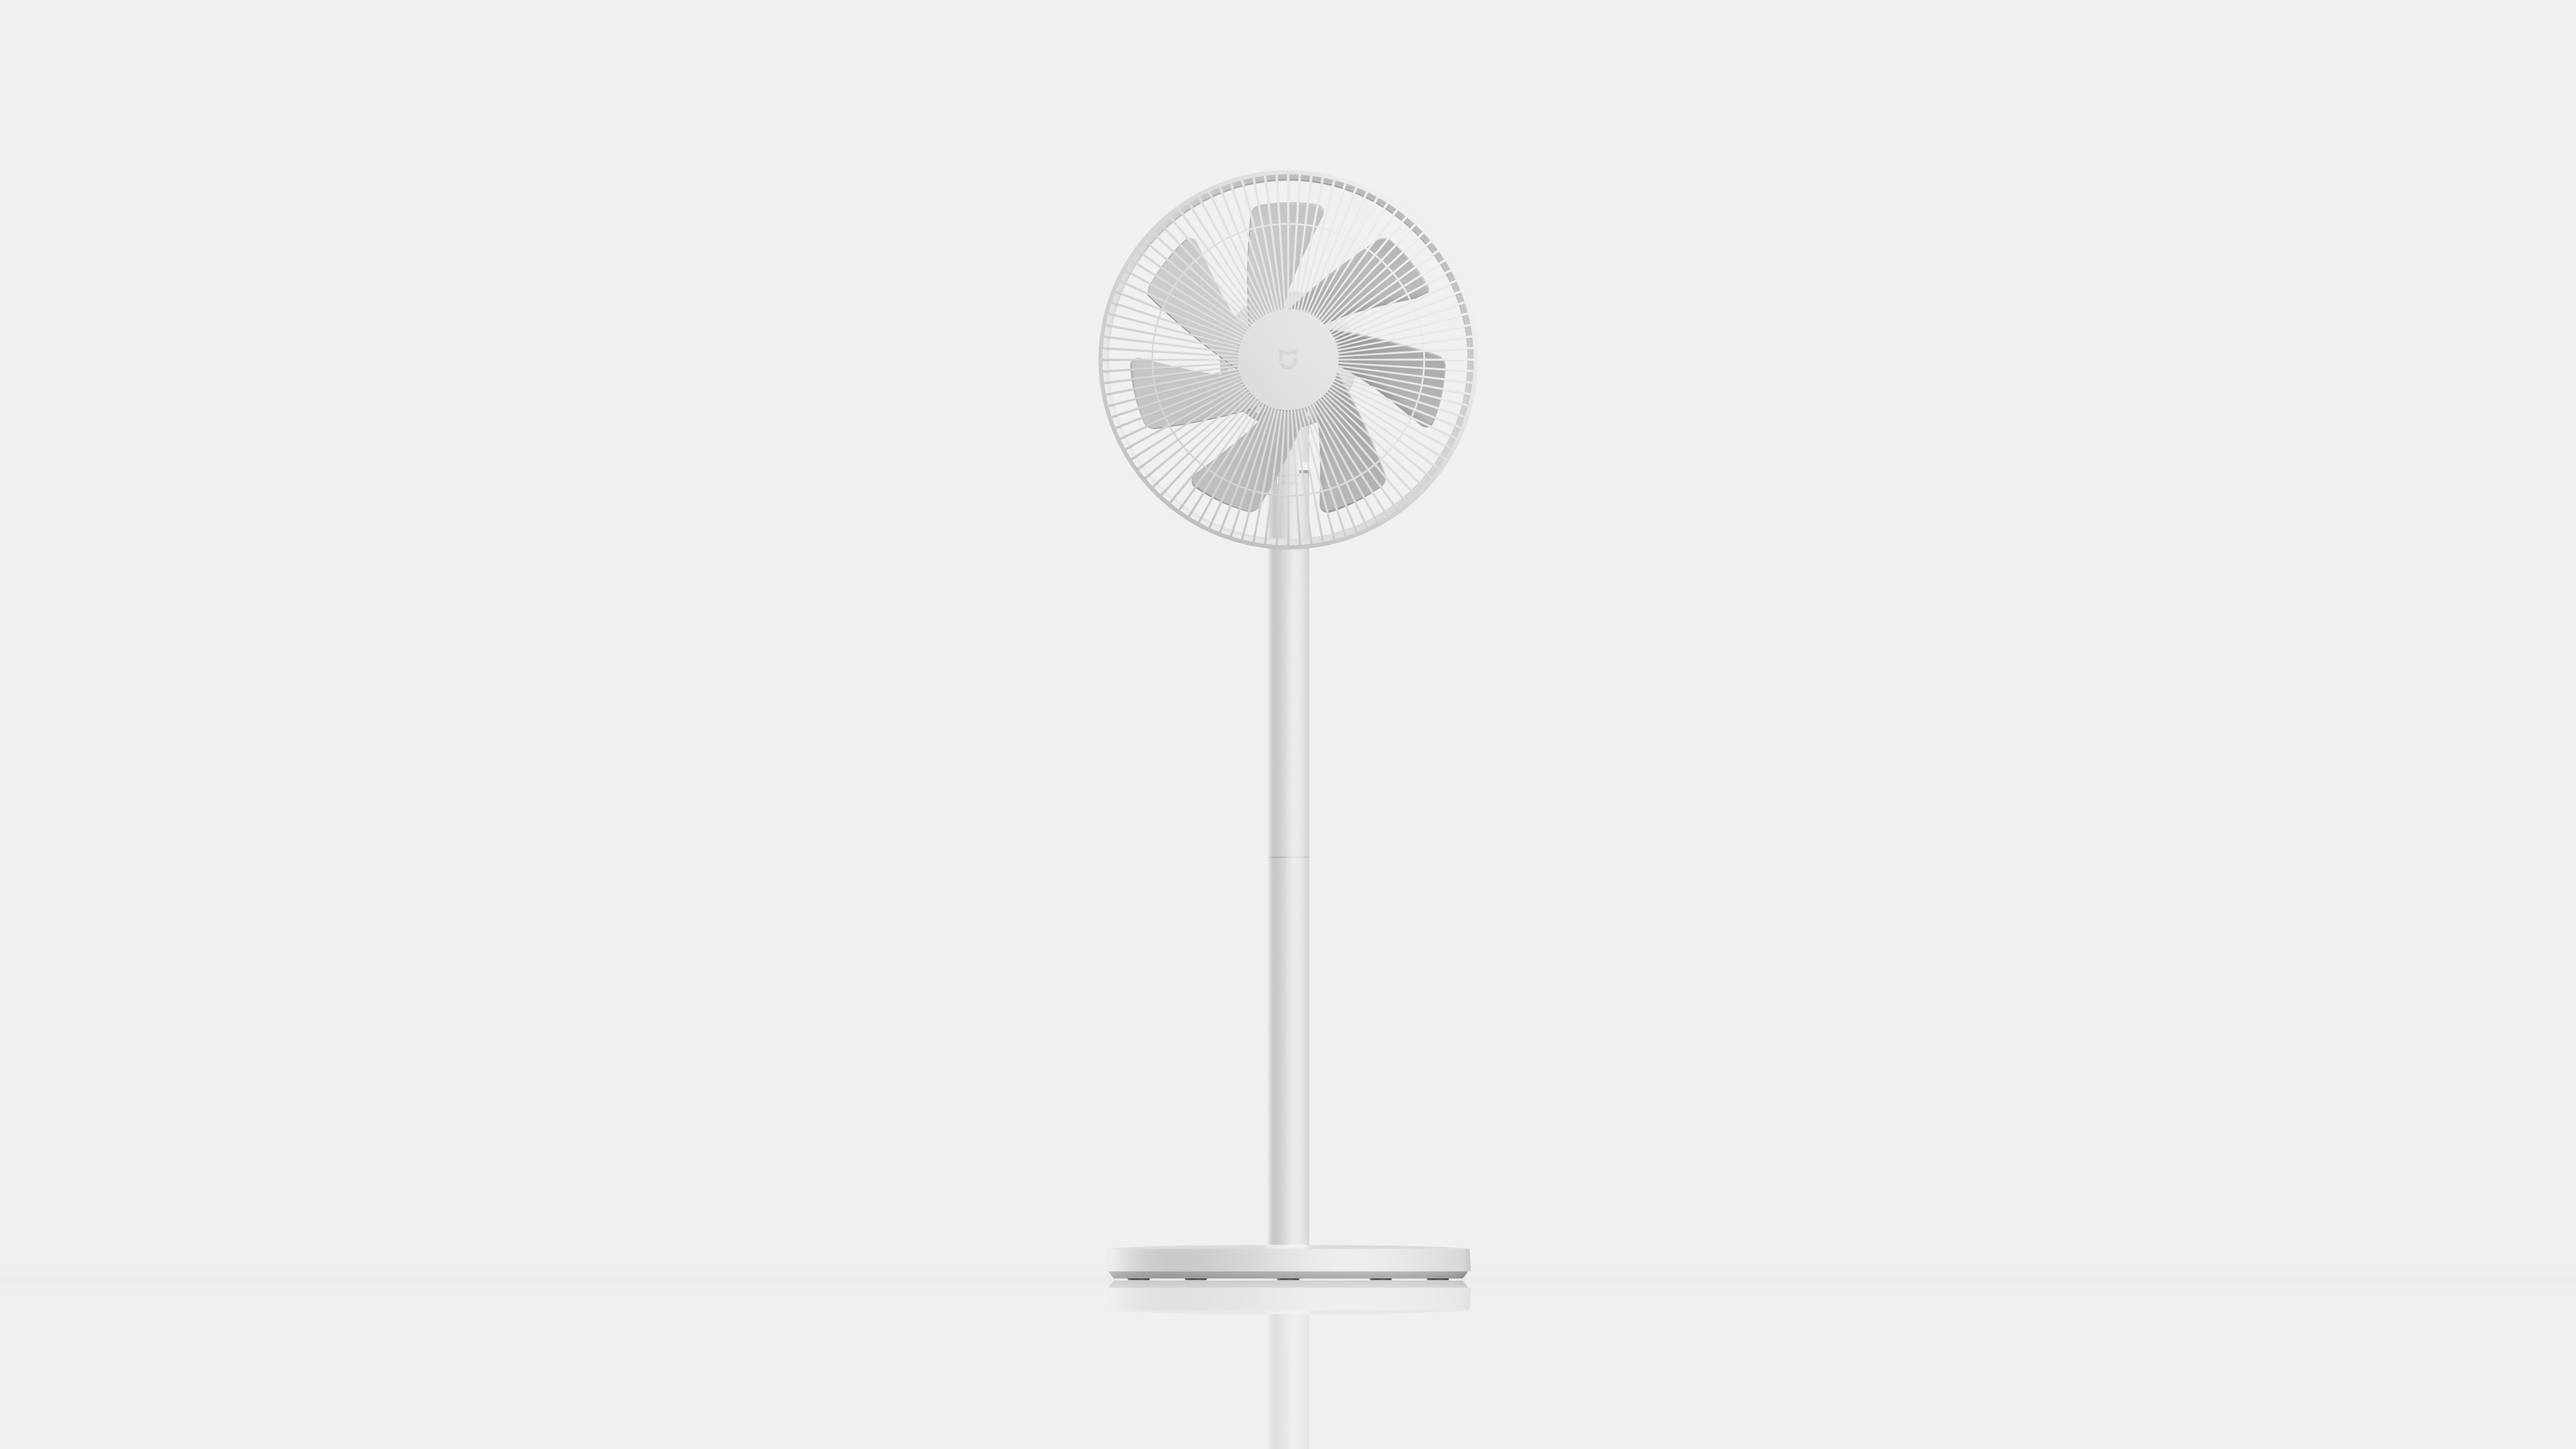 Вентилятор Xiaomi Bpts01dm Белый